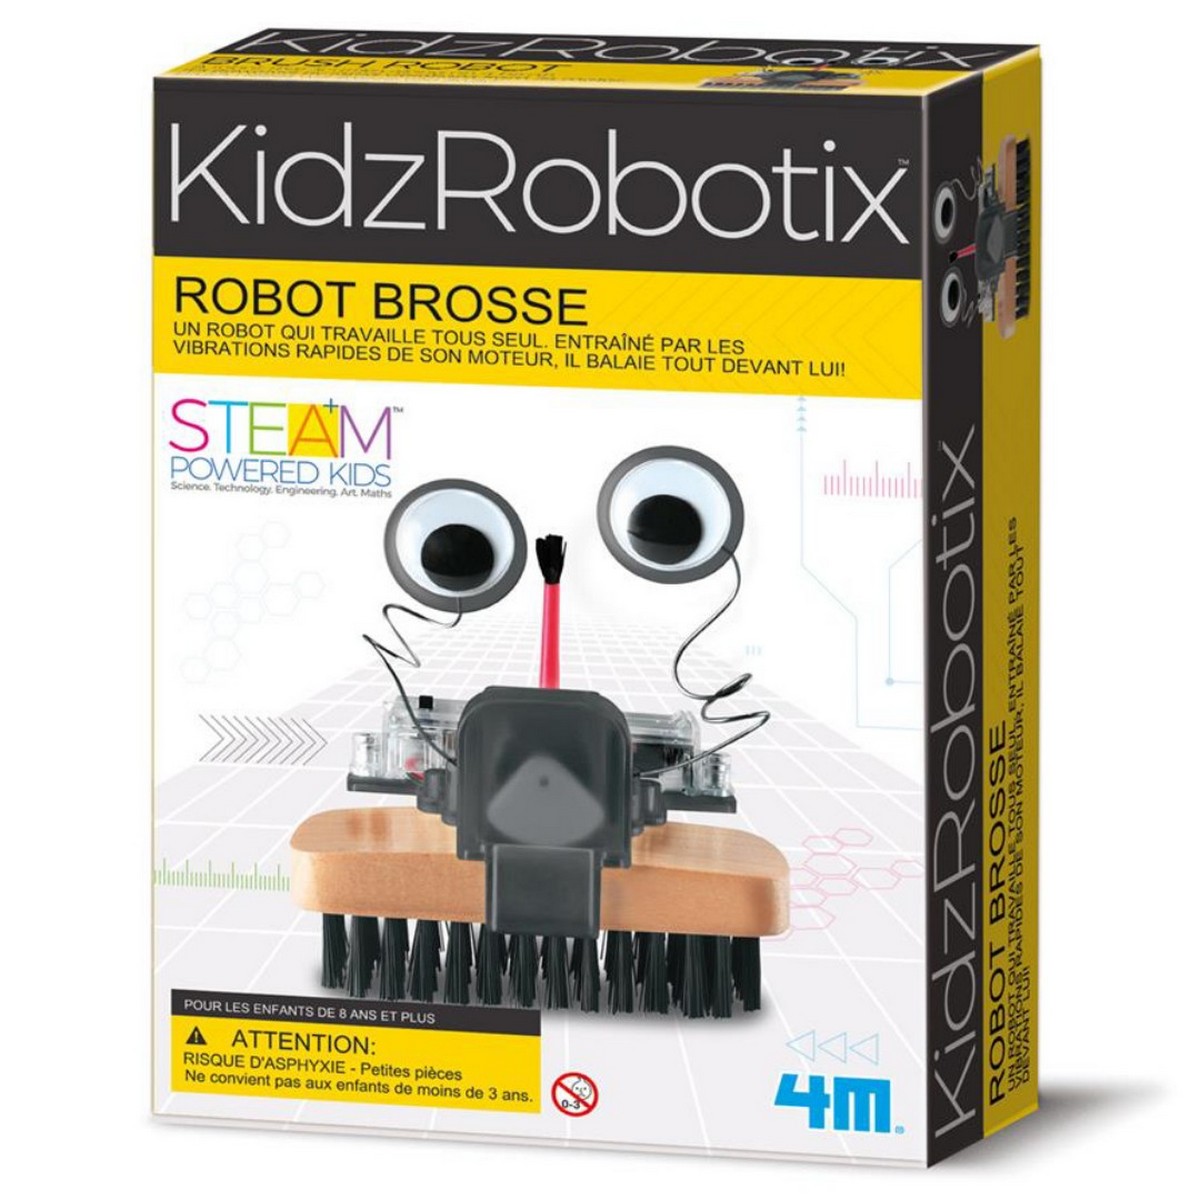 4m kidsrobotix robot brosse une idee cadeau chez ugo et lea (4)